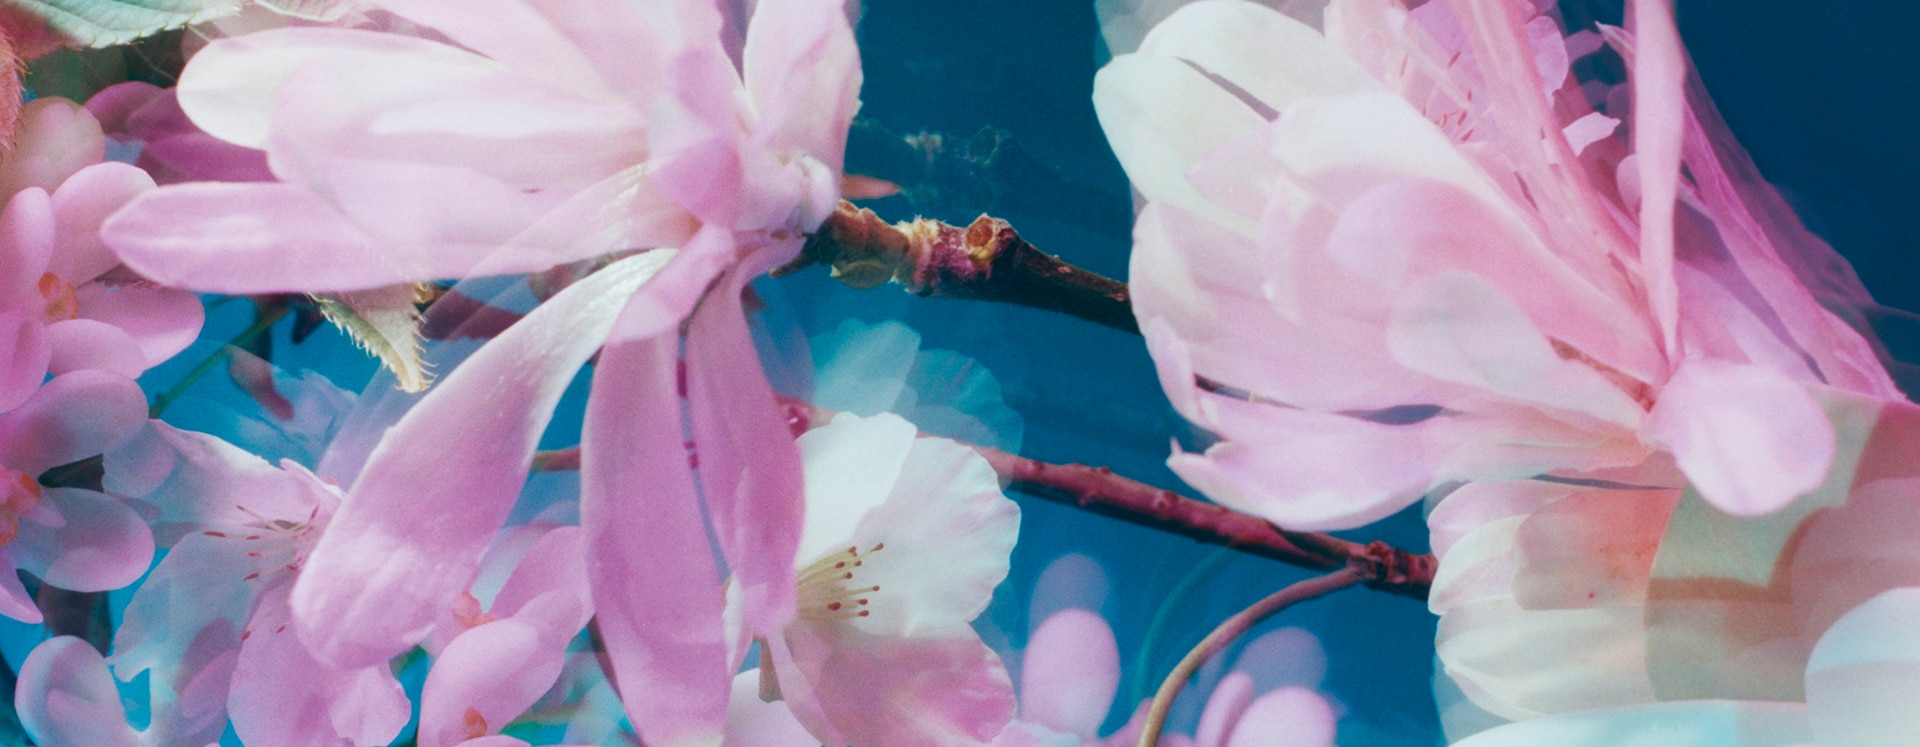 Blossoms Collection Inspiration | Jo Malone London